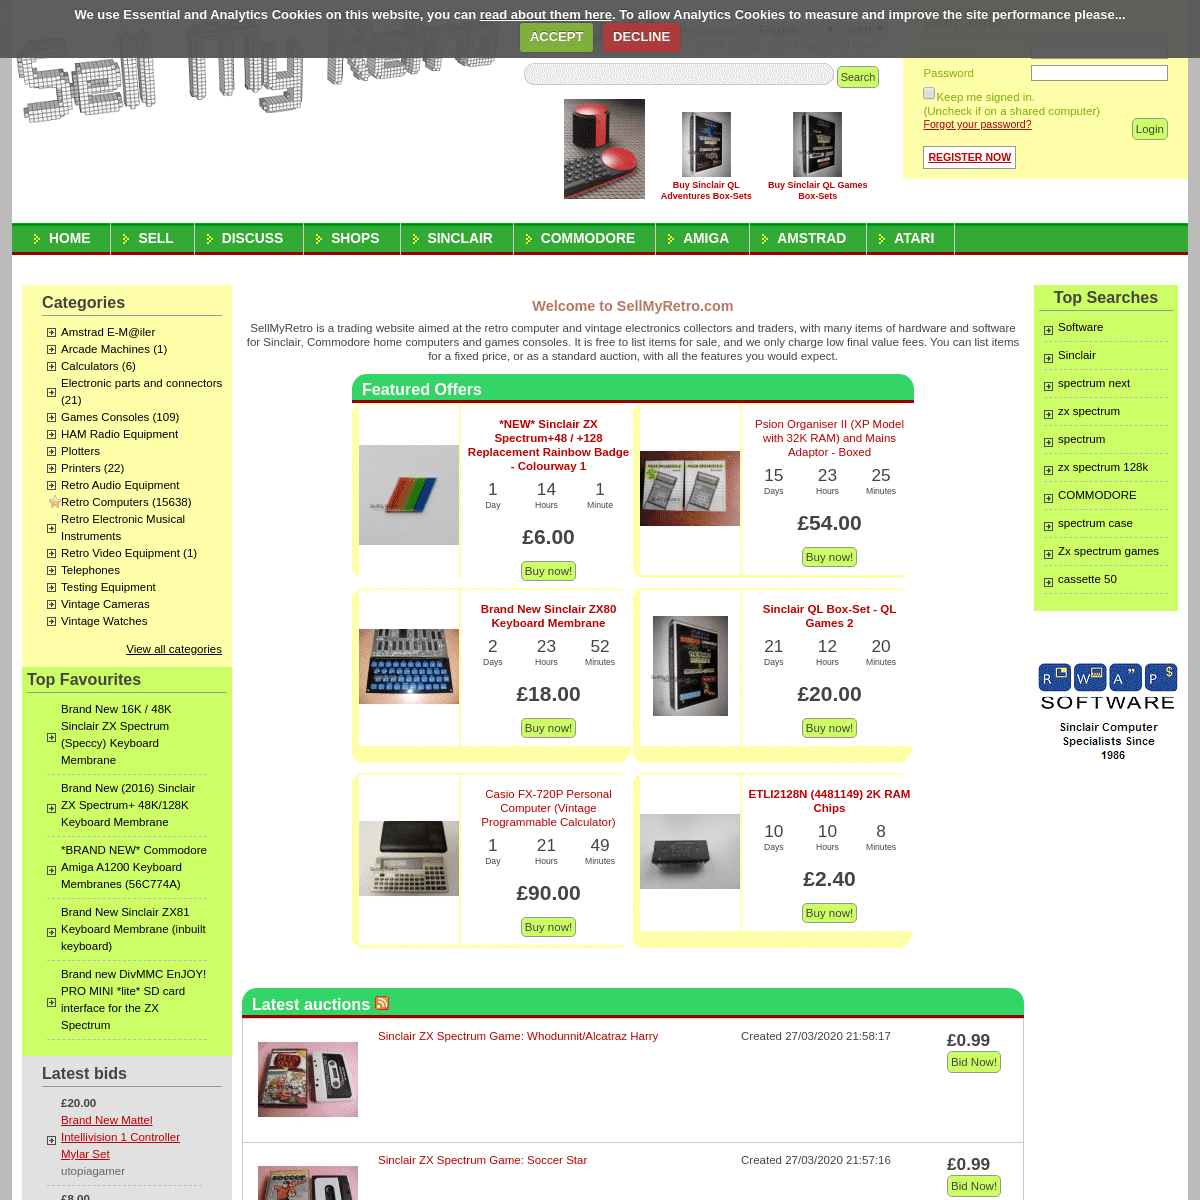 A complete backup of sellmyretro.com